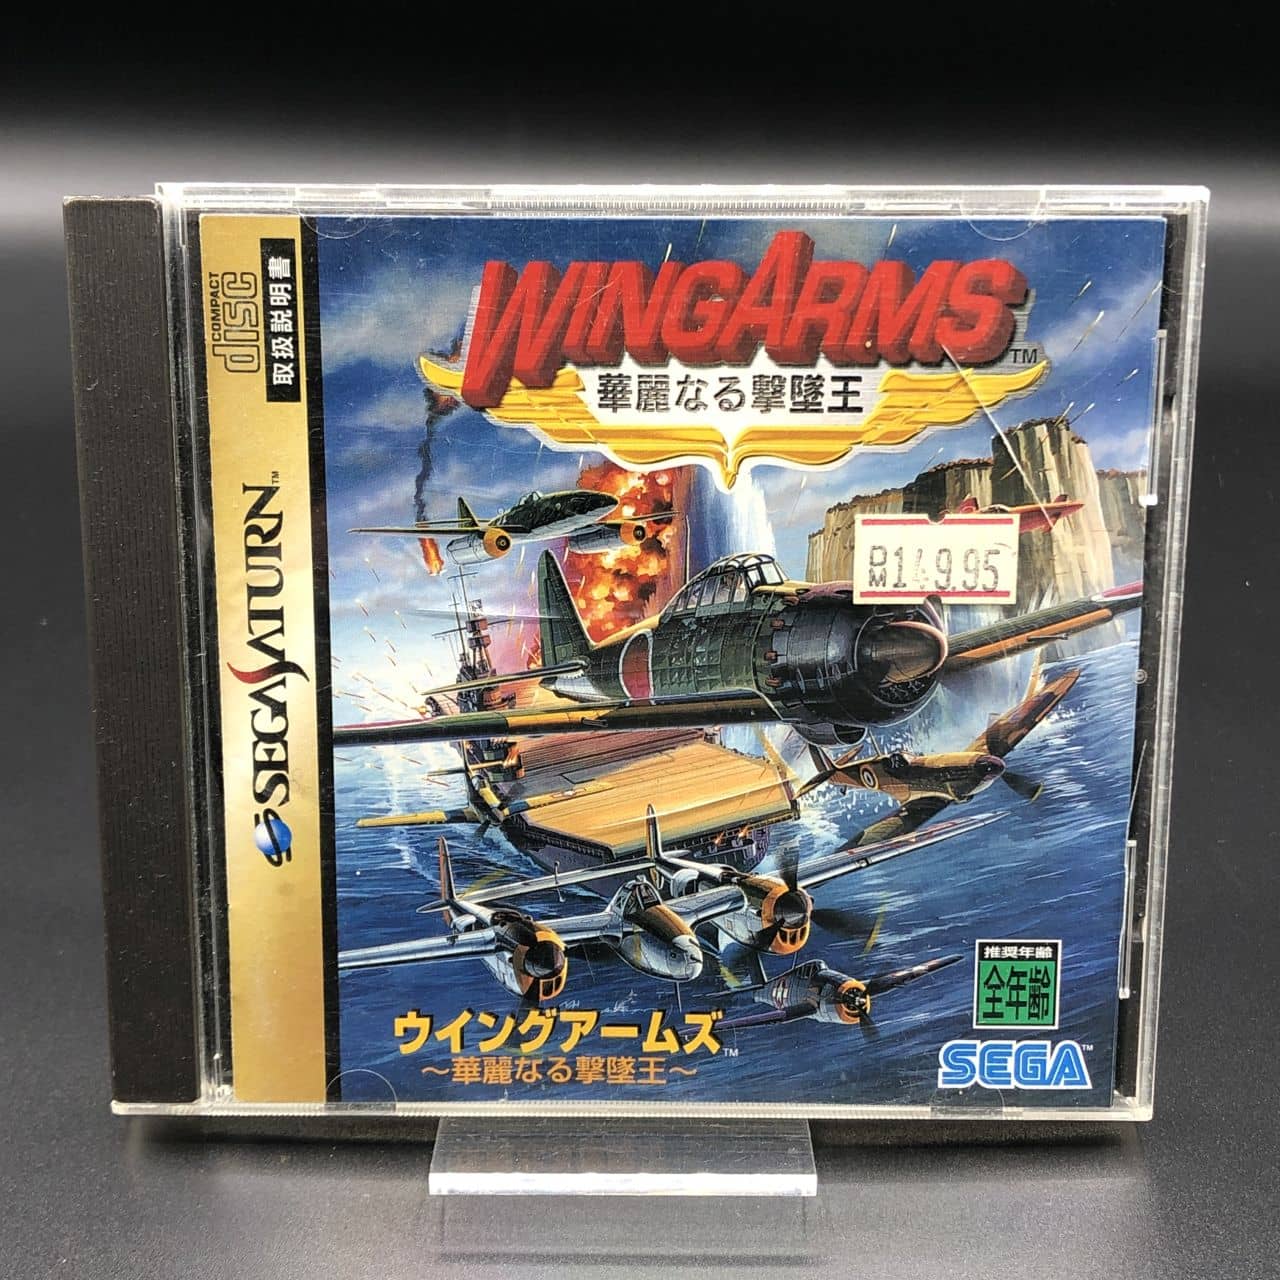 Wing Arms (Import Japan) (Komplett) (Gebrauchsspuren) Sega Saturn